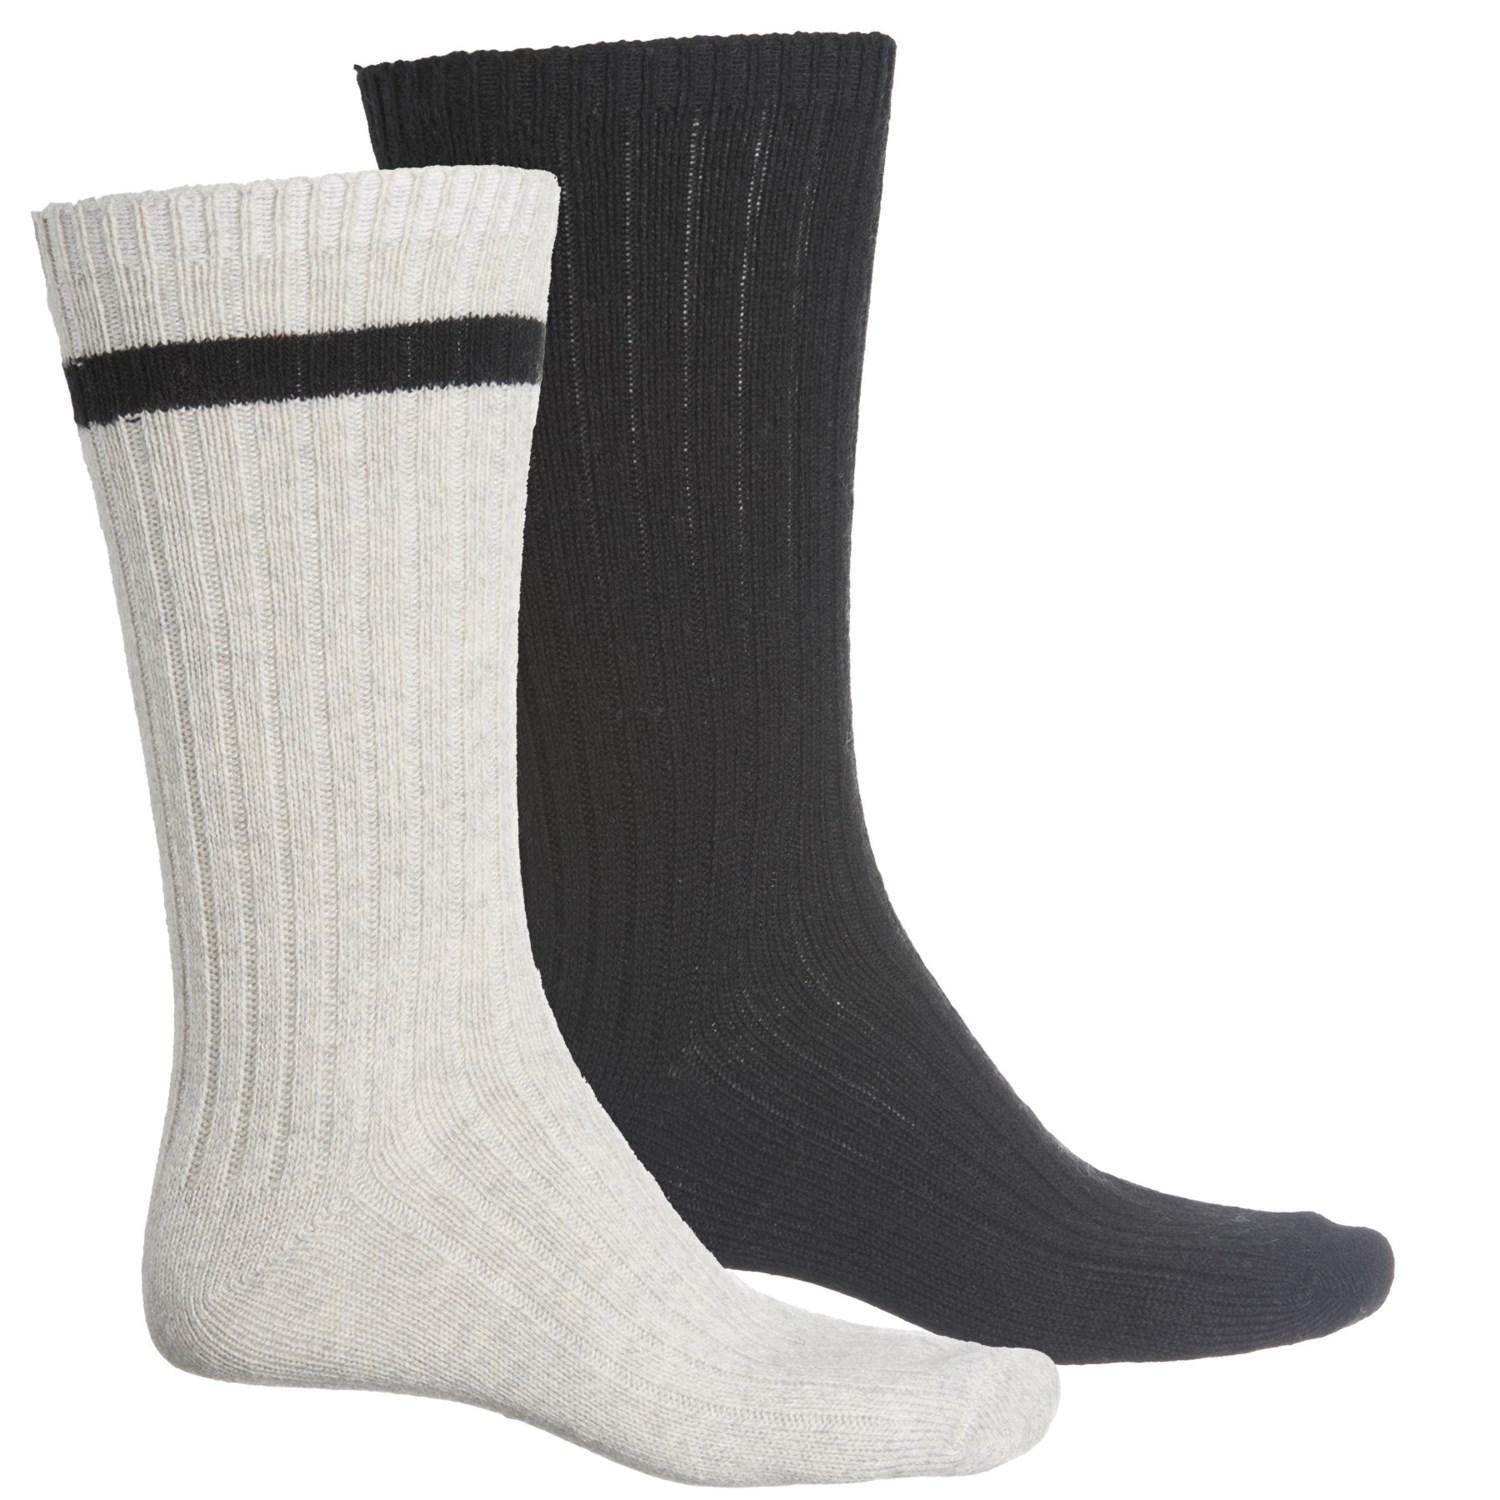 Eddie Bauer Merino Ragg Wool Boot Socks (For Men) - Save 58%